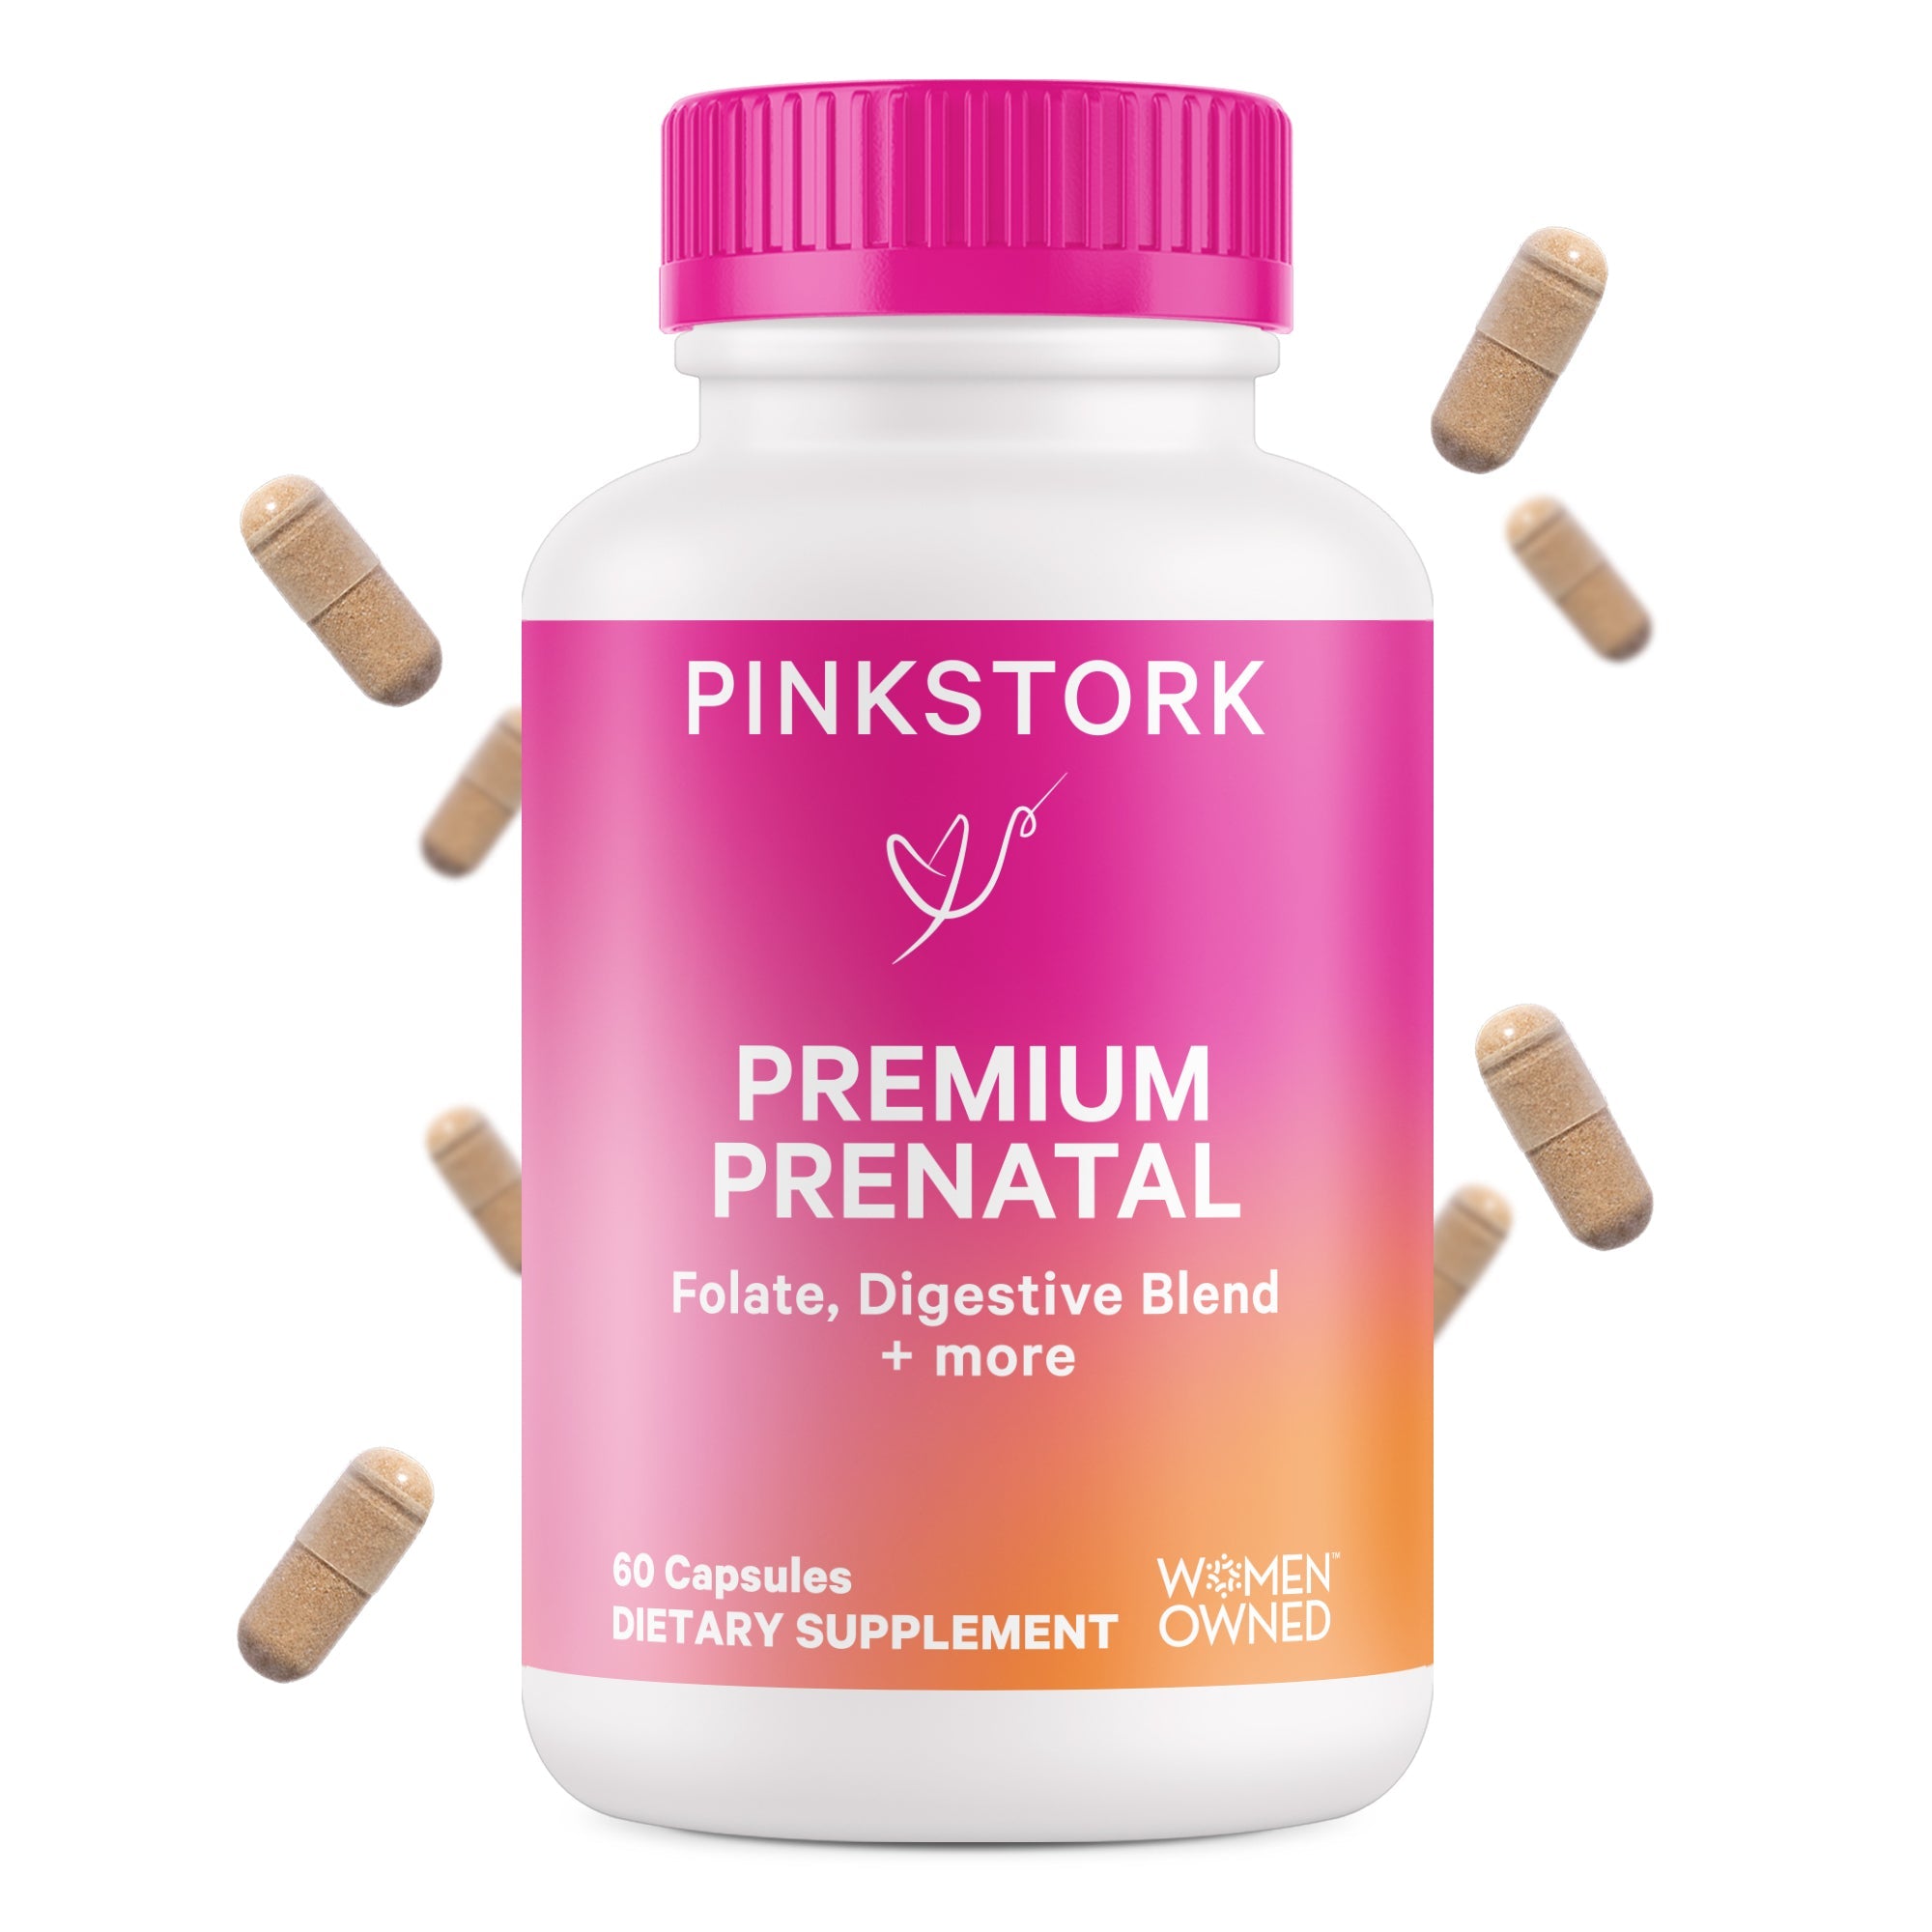 Premium Prenatal